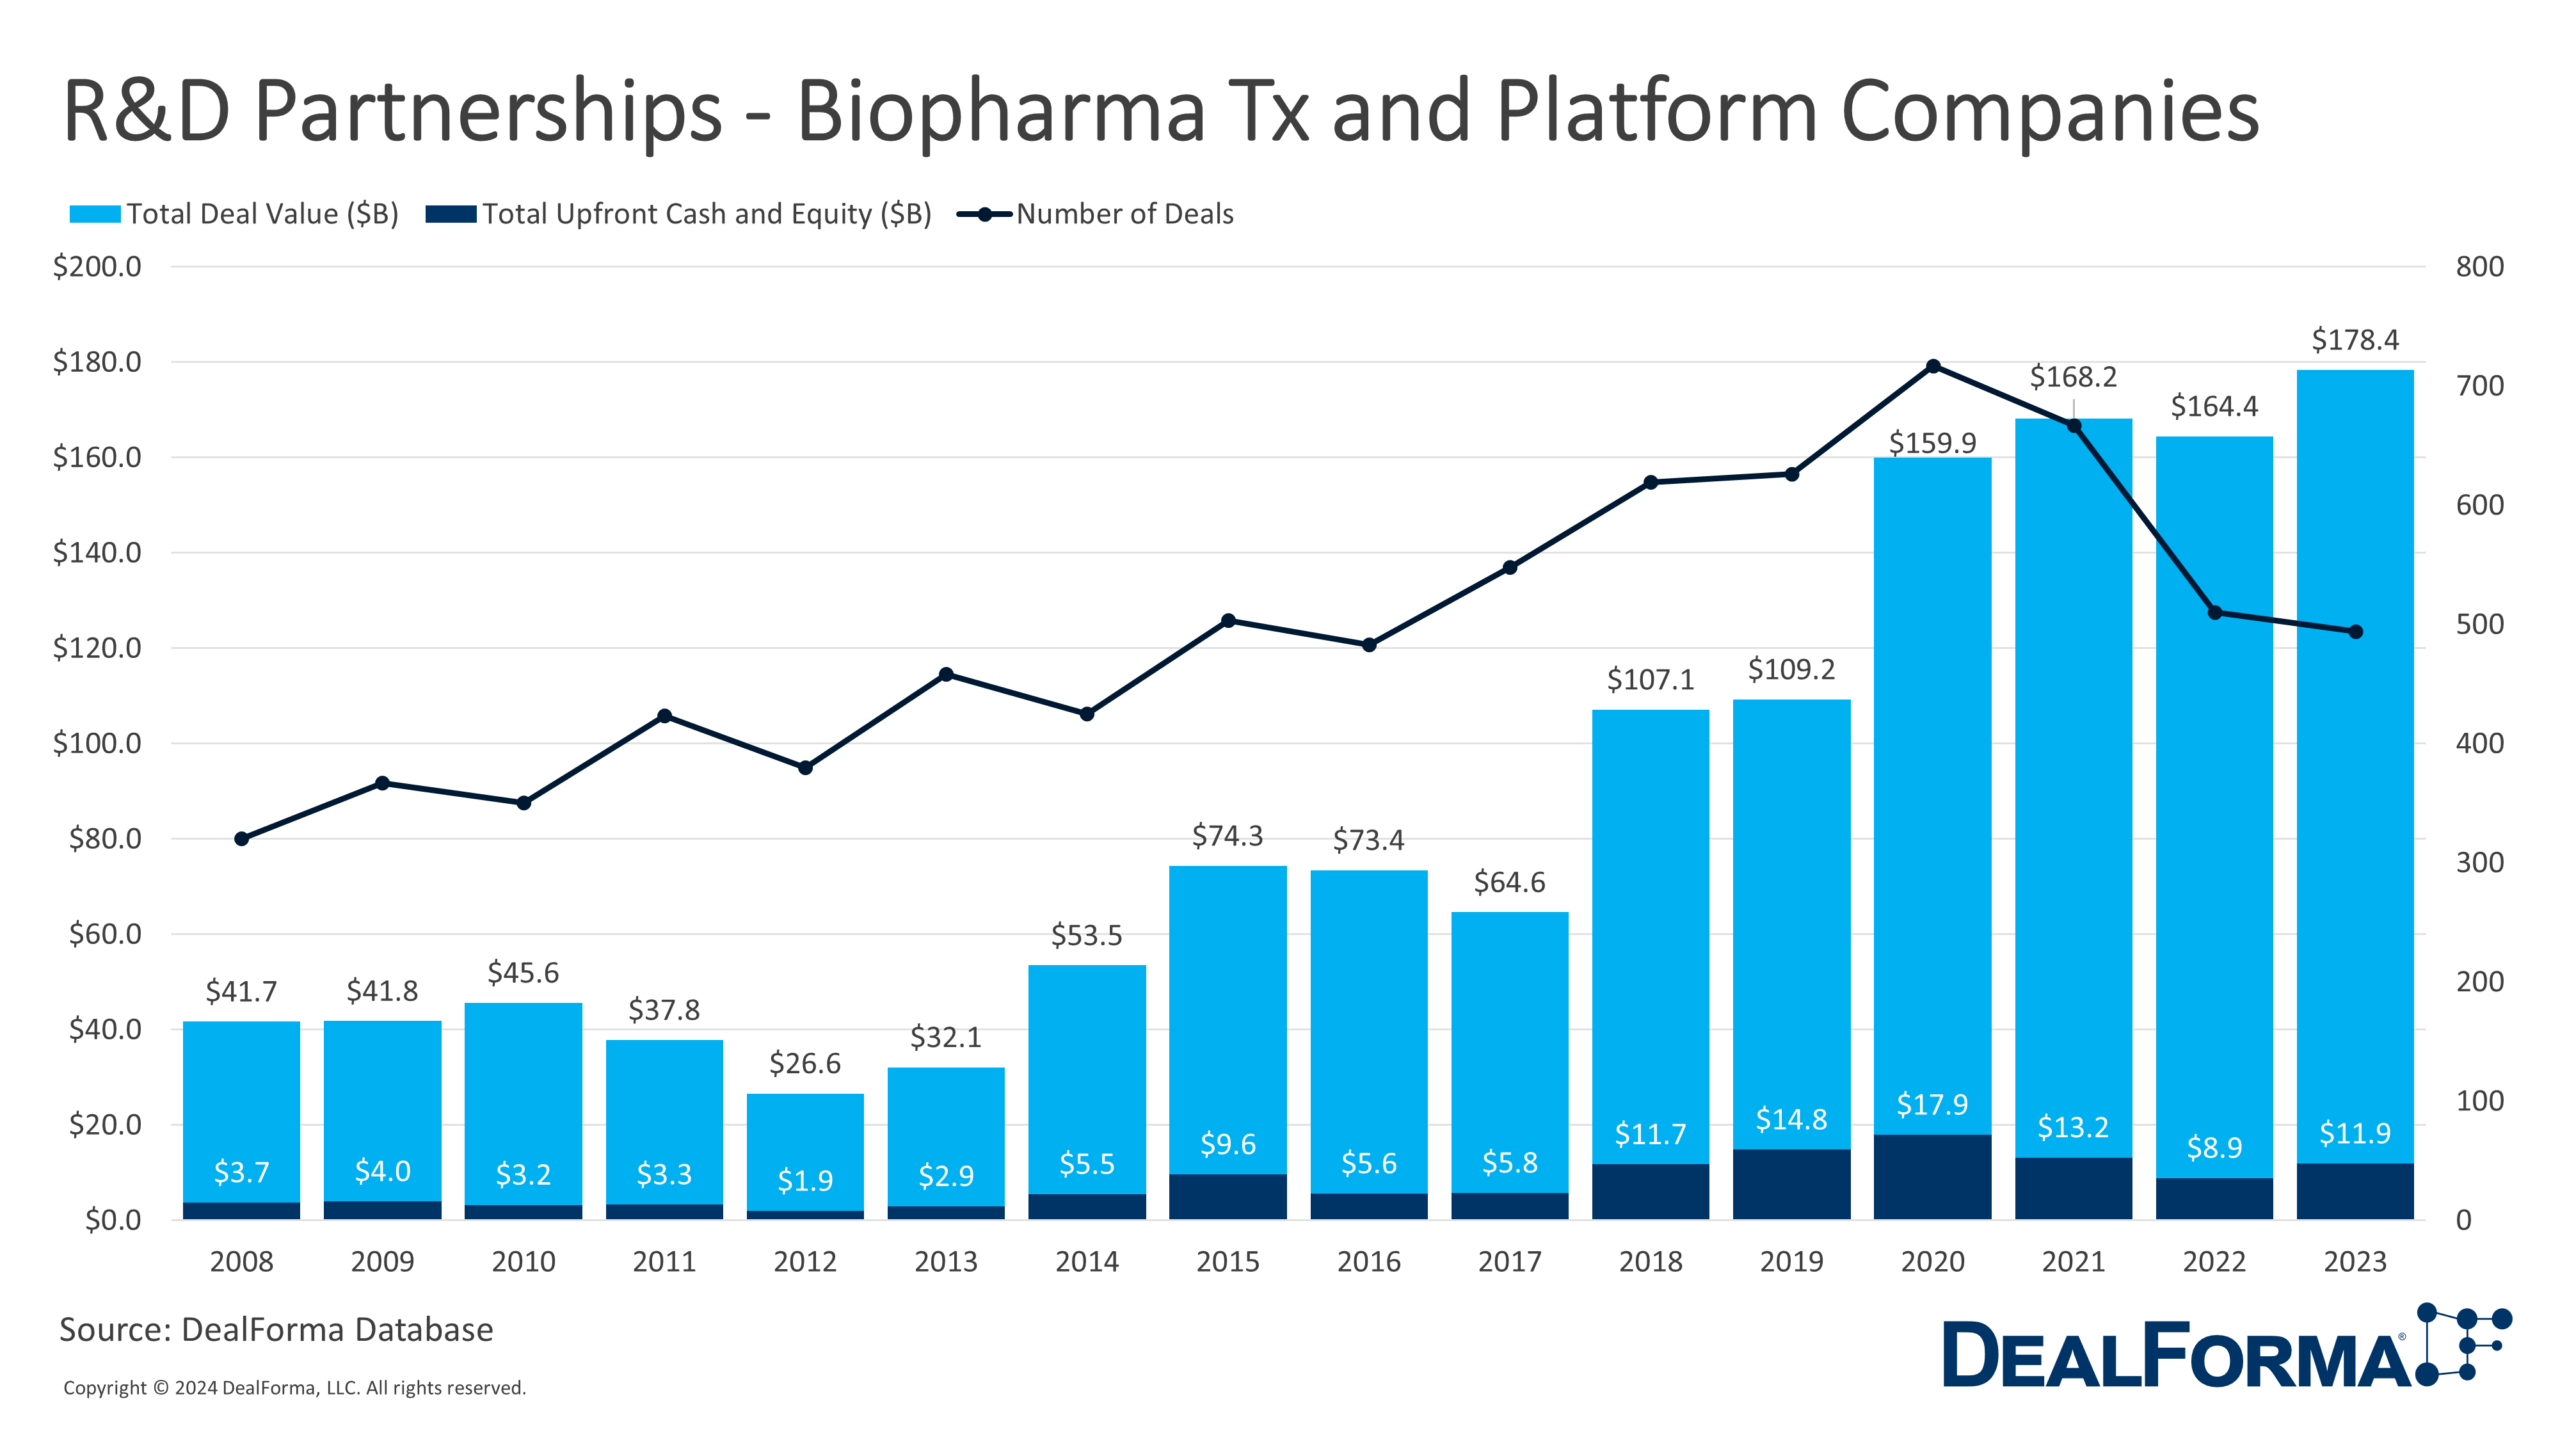 R&D Partnerships - Biopharma Tx and Platform Companies